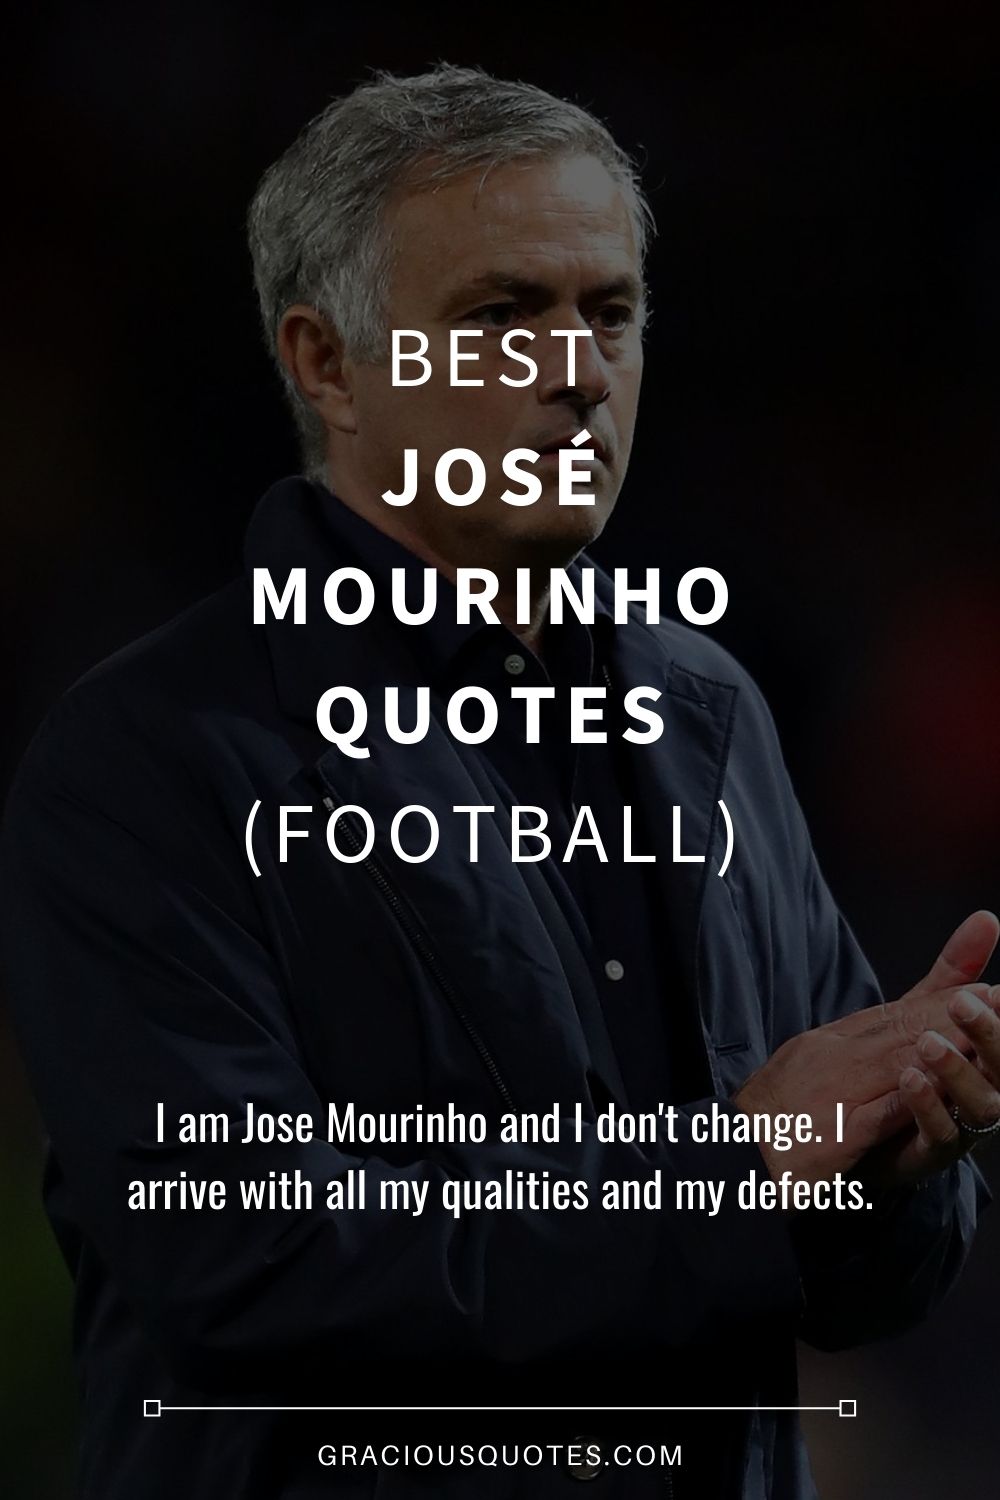 Best José Mourinho Quotes (FOOTBALL) - Gracious Quotes